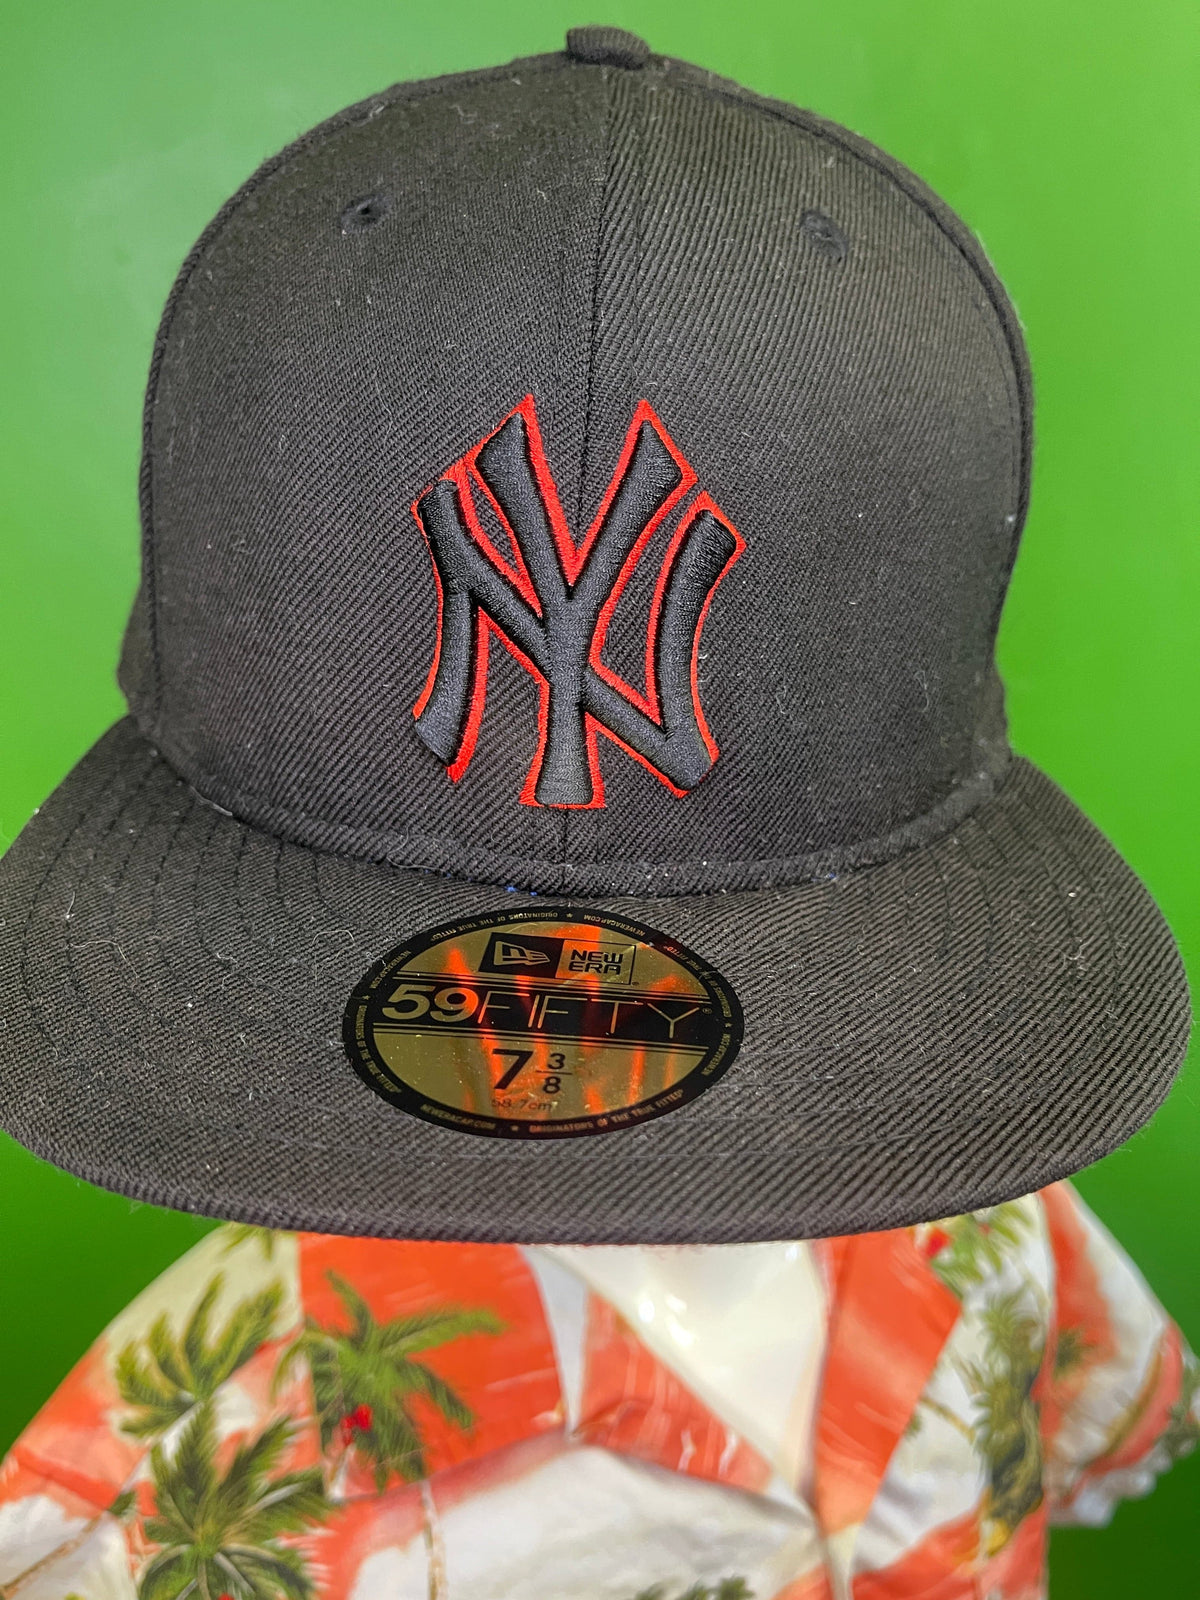 MLB New York Yankees New Era 59FIFTY Cap/Hat Black Red Size 7-3/8 NWT